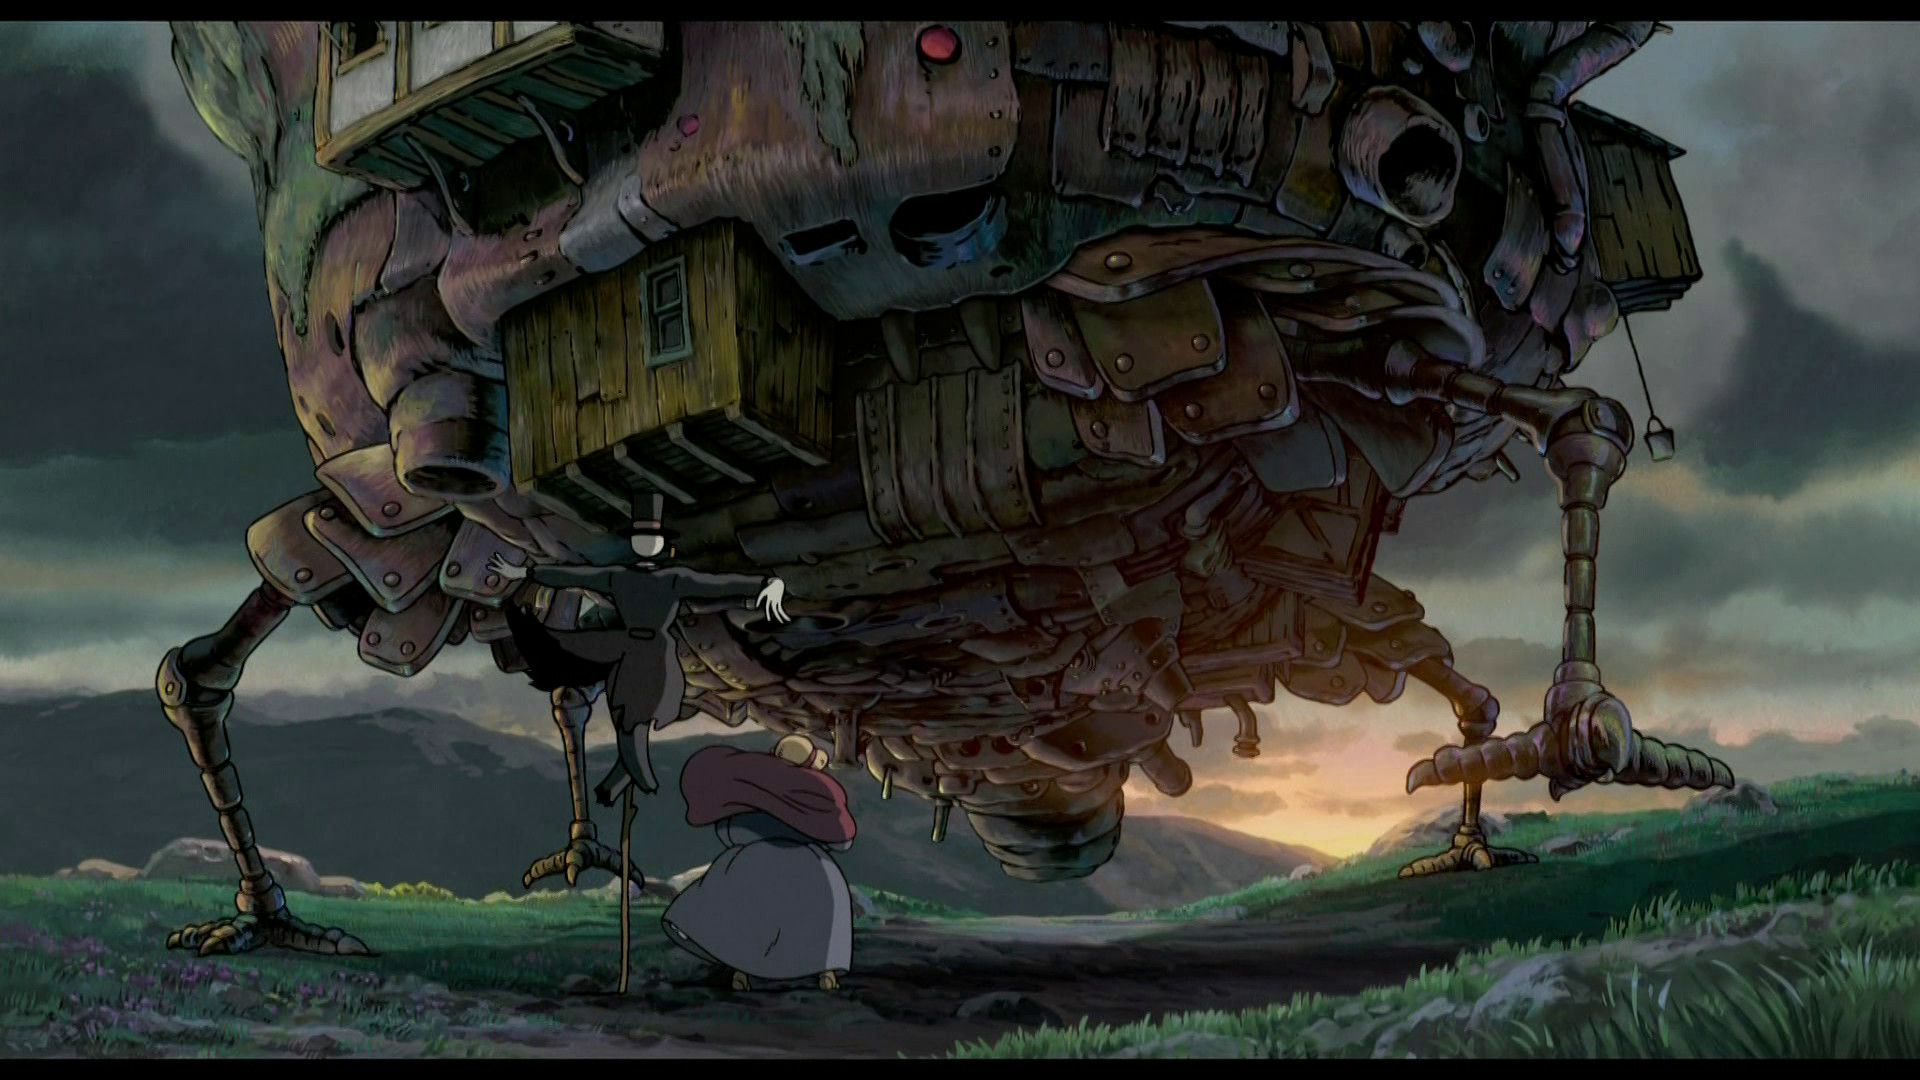 Hayao Miyazaki Howls Moving Castle wallpaper – 896140